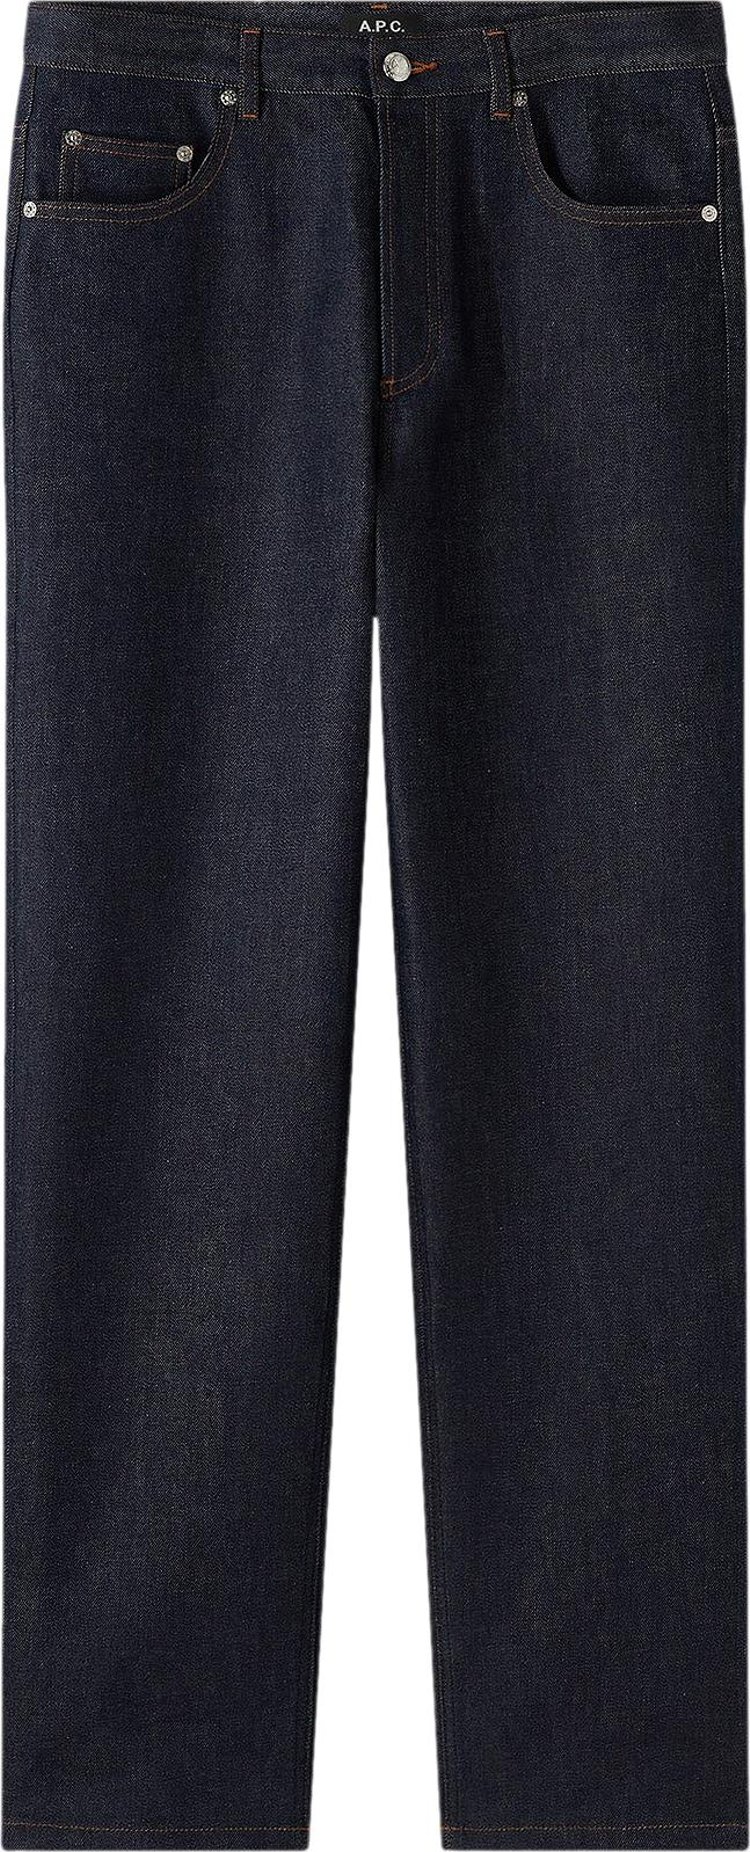 A.P.C. Fairfax Jeans 'Indigo'